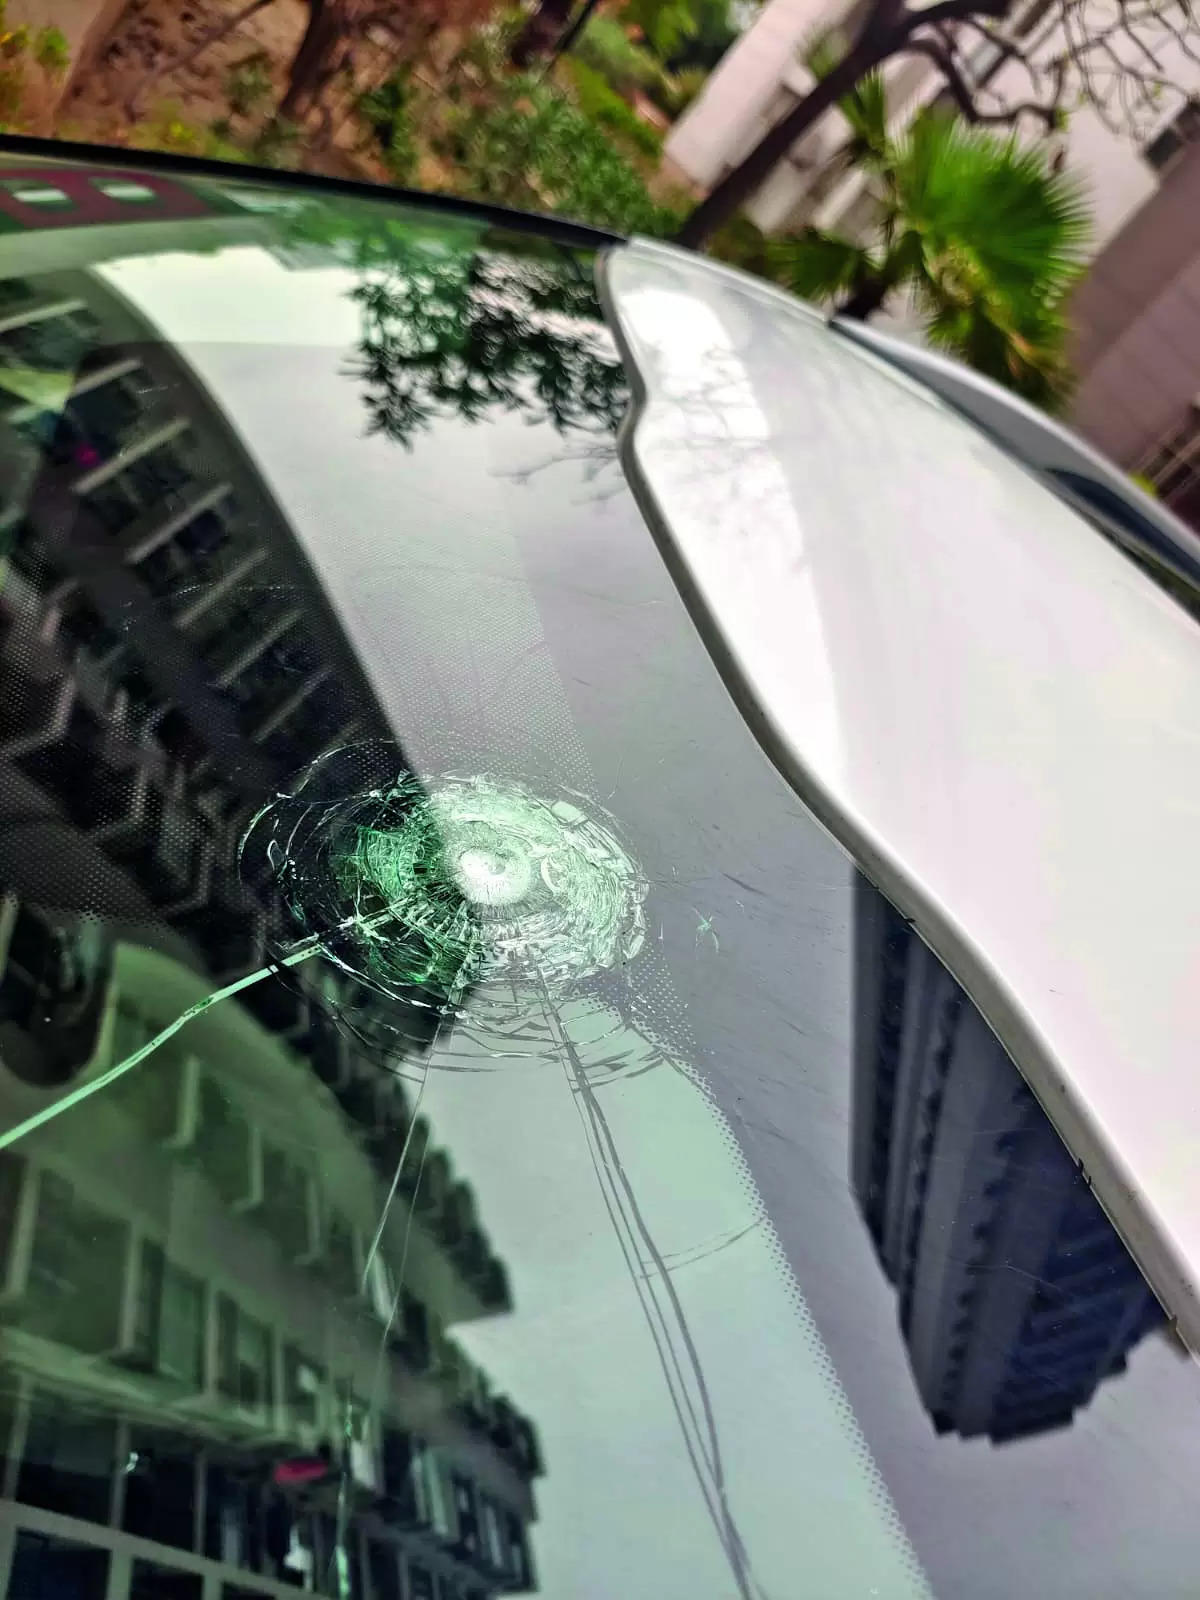 Crack in windshield, pellet spark gunshot fears in Noida condo